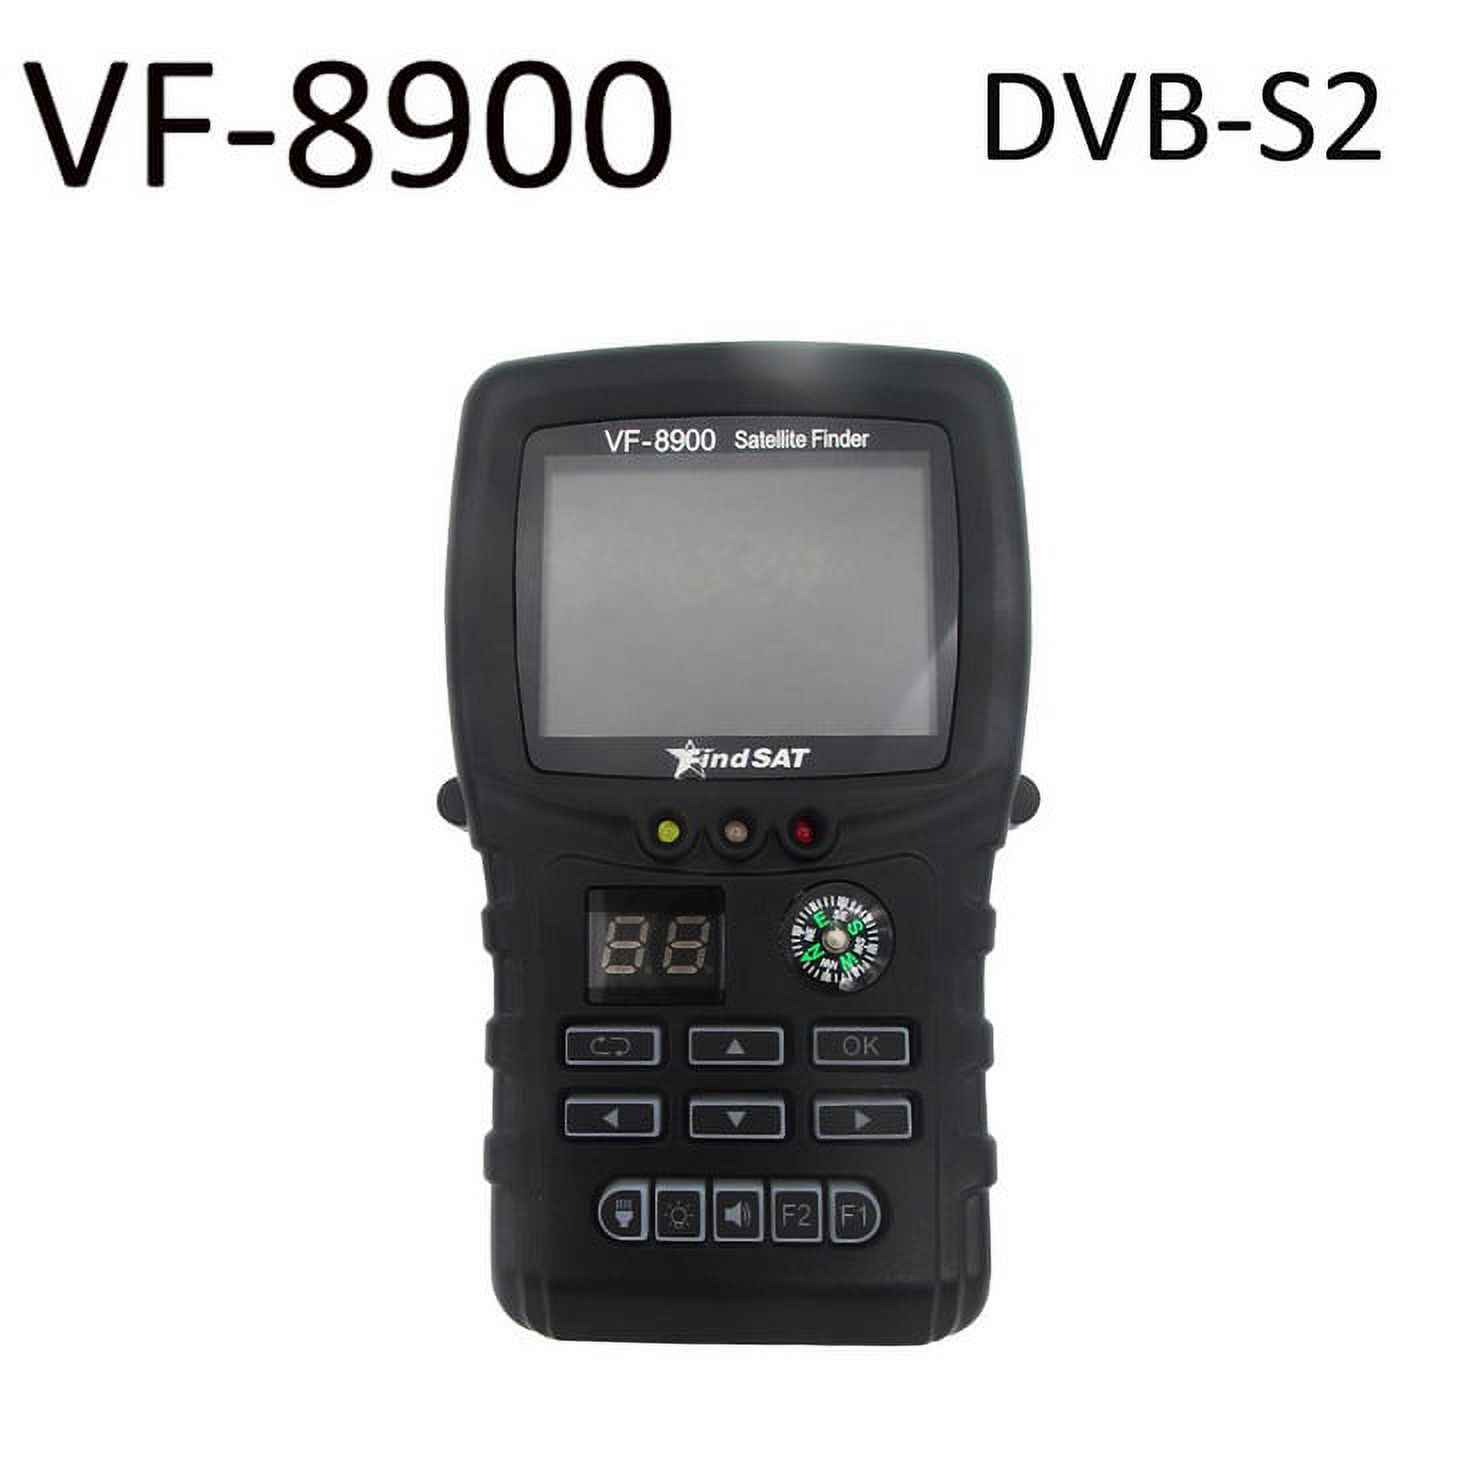 HD Satfinder Star Search VF-8900D DVB-S2 Satellite Meter Satellite Finder Built-in Flashlight Compass Signal Display Car Charger Specification:U.S. regulations - image 1 of 8